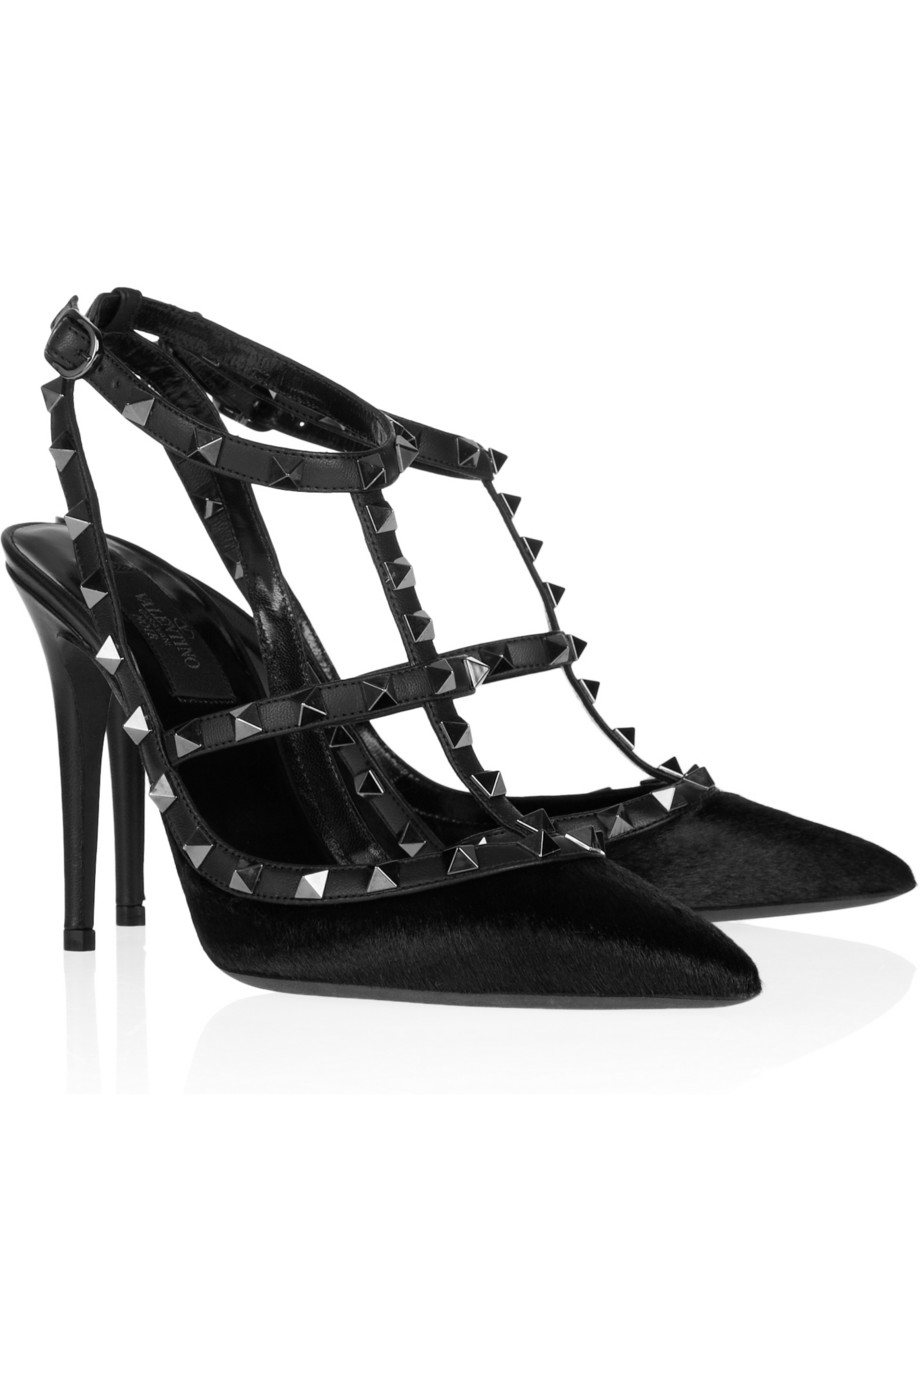 valentino studded heels price